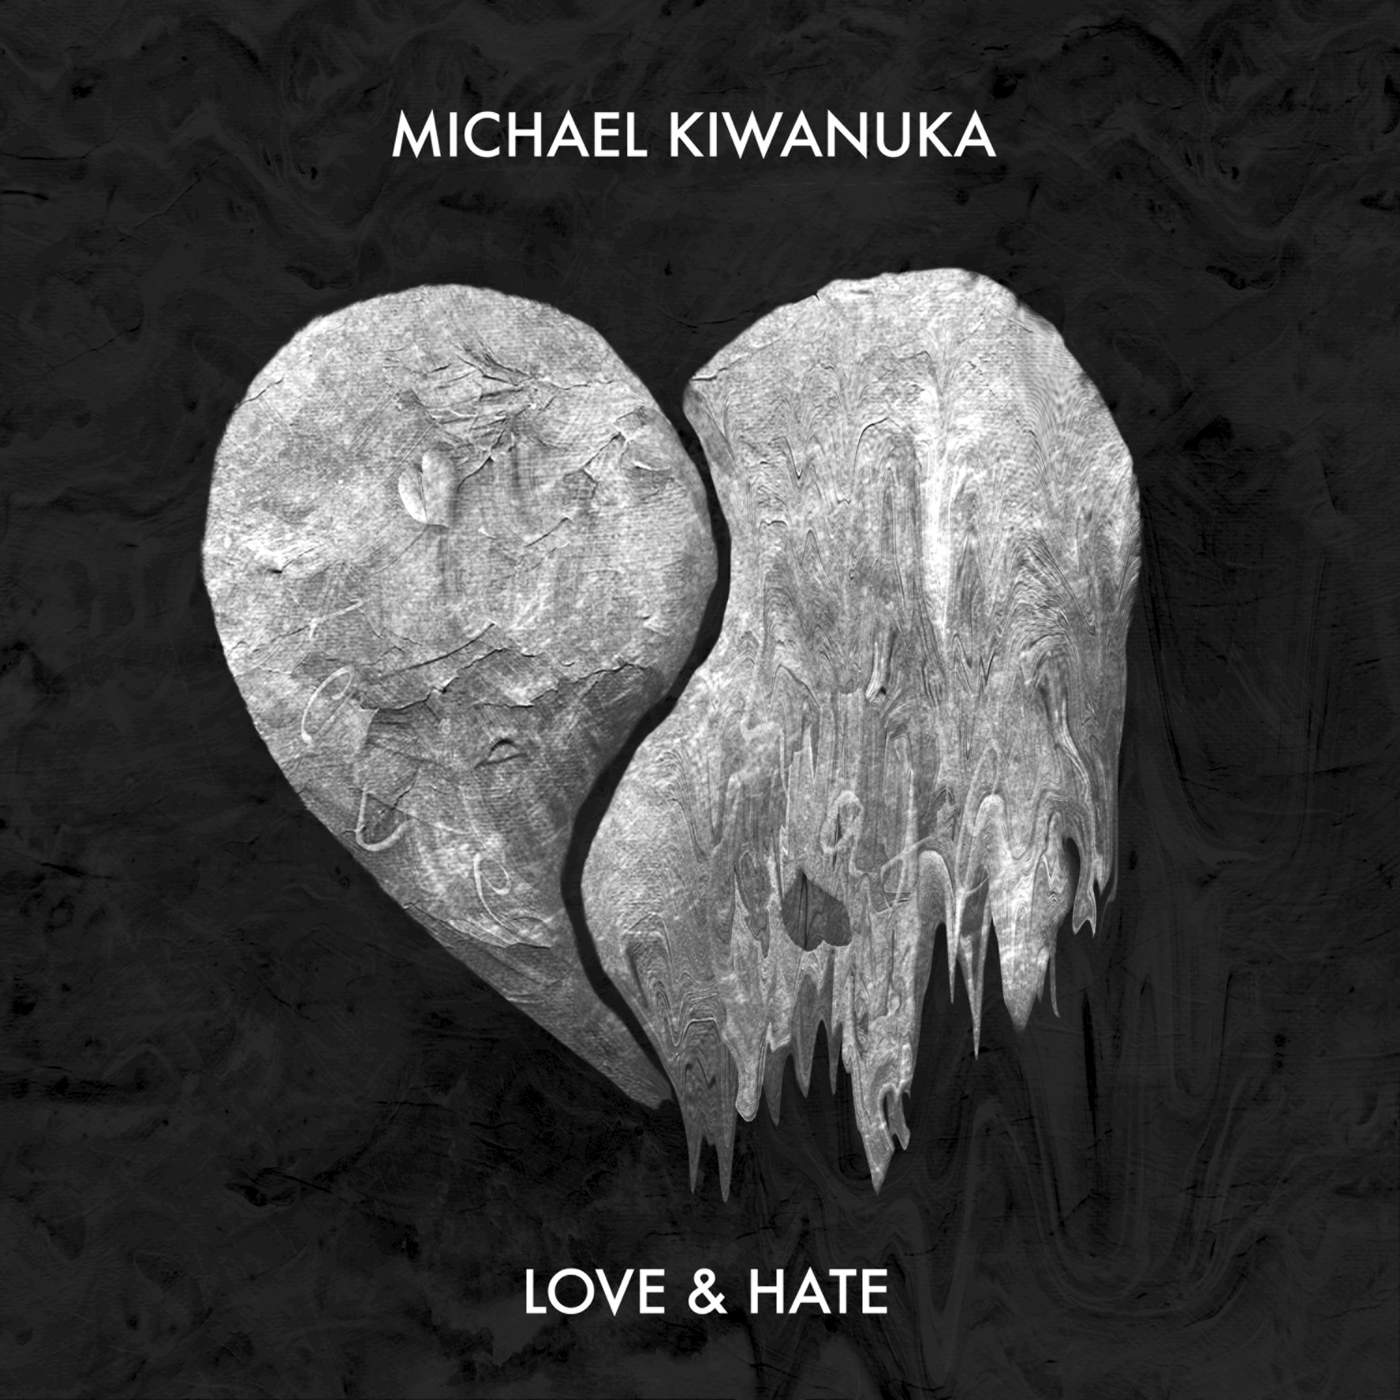 Art for Love & Hate by Michael Kiwanuka